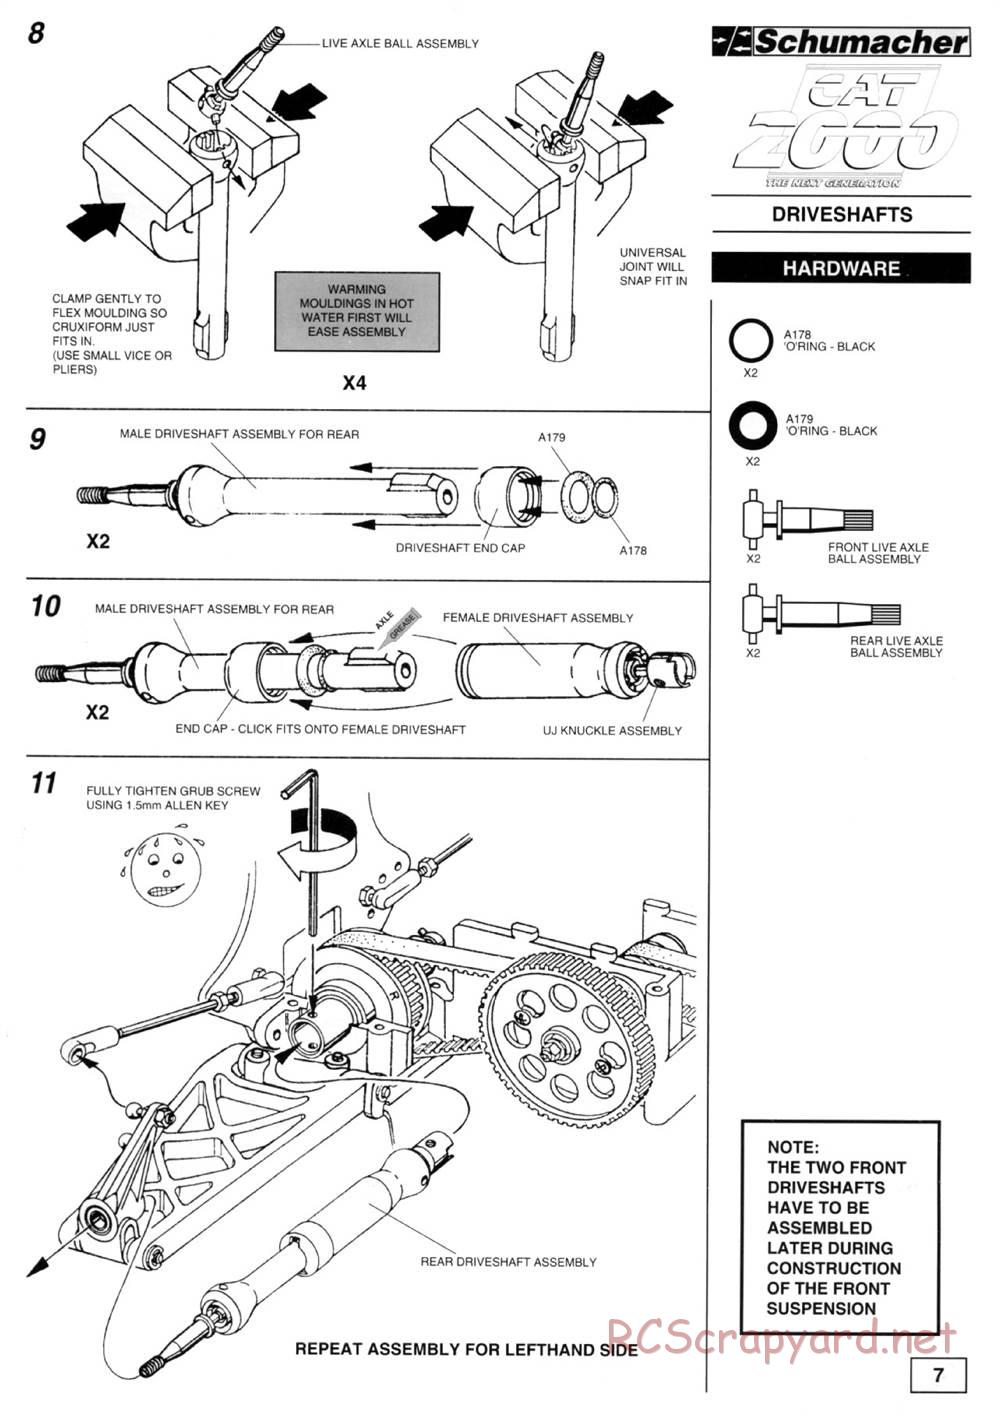 Schumacher - Cat 2000 - Manual - Page 9